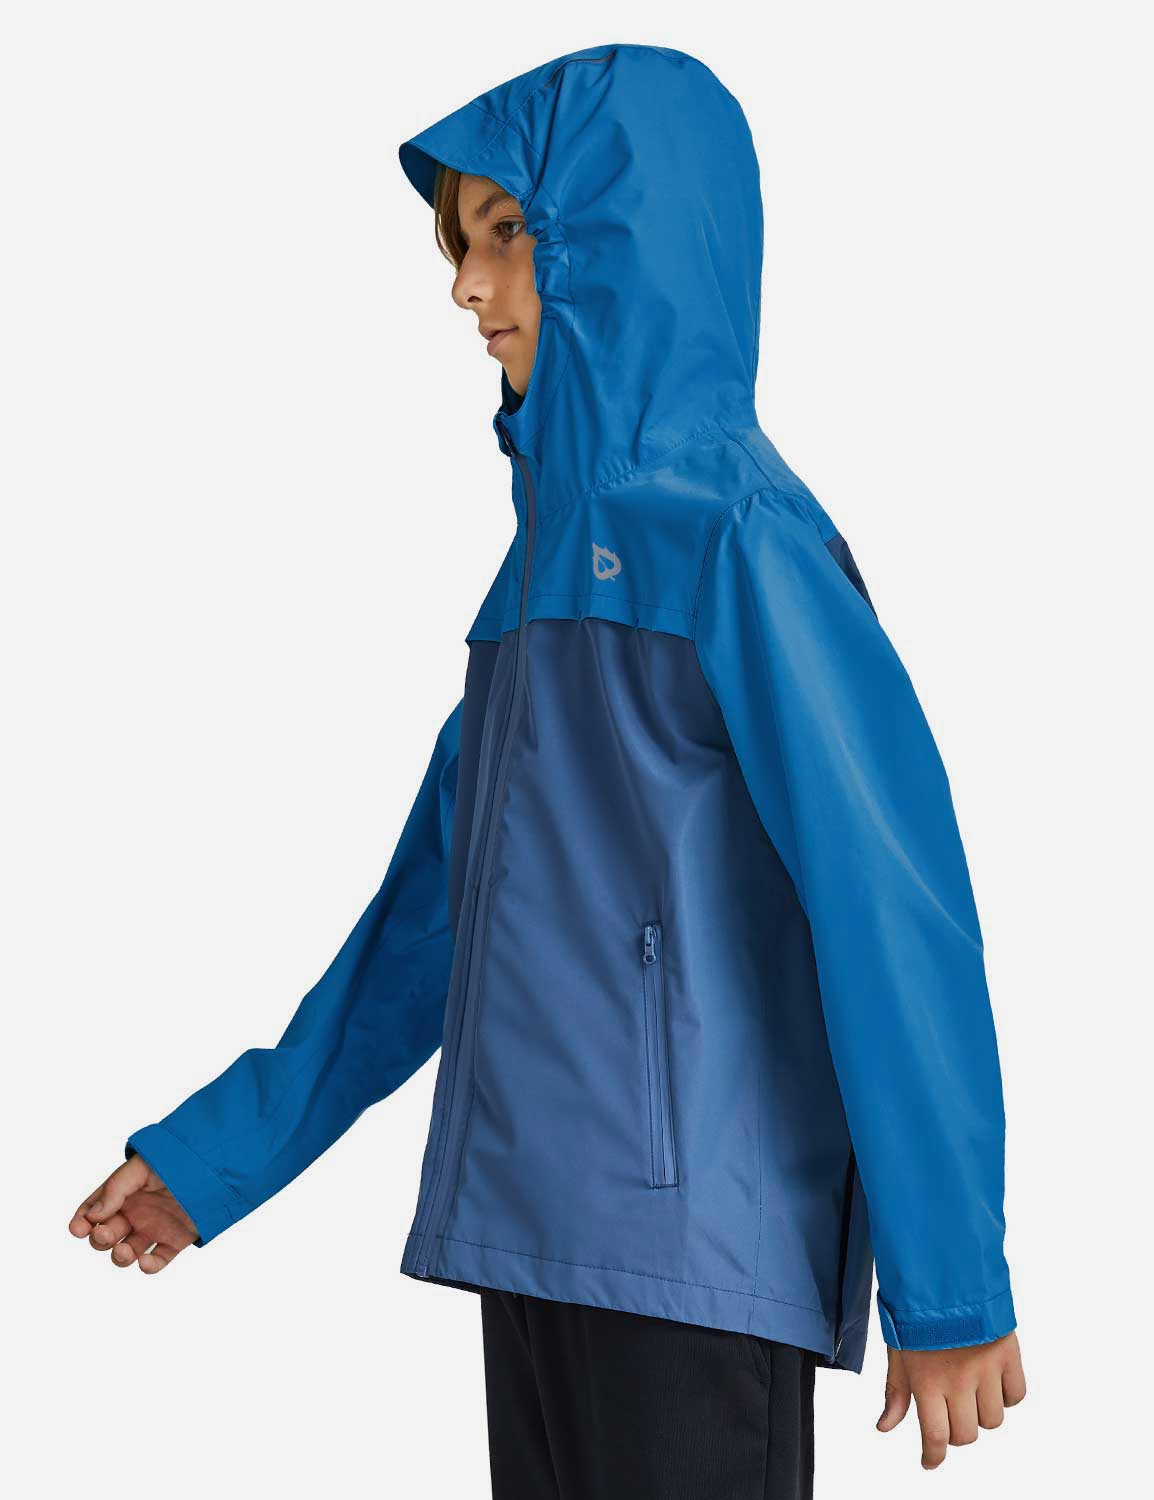 Baleaf Kid's Waterproof Outdoor Hooded Cycling Rain Jacket cai037 Navy/Blue Side